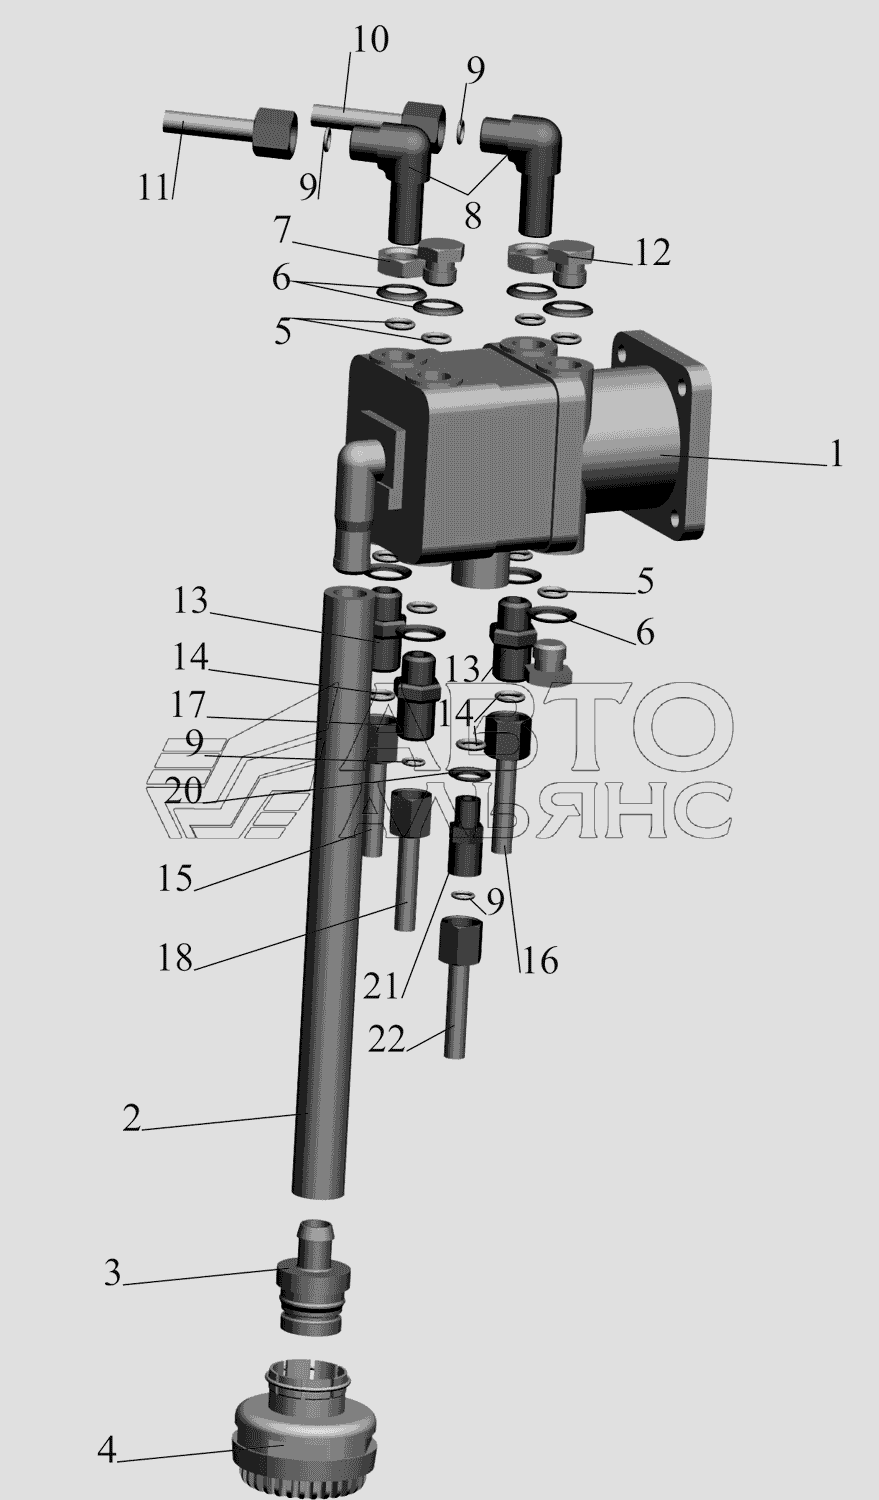 Тормозной кран и присоединительная арматура МАЗ-437130 (Зубренок)